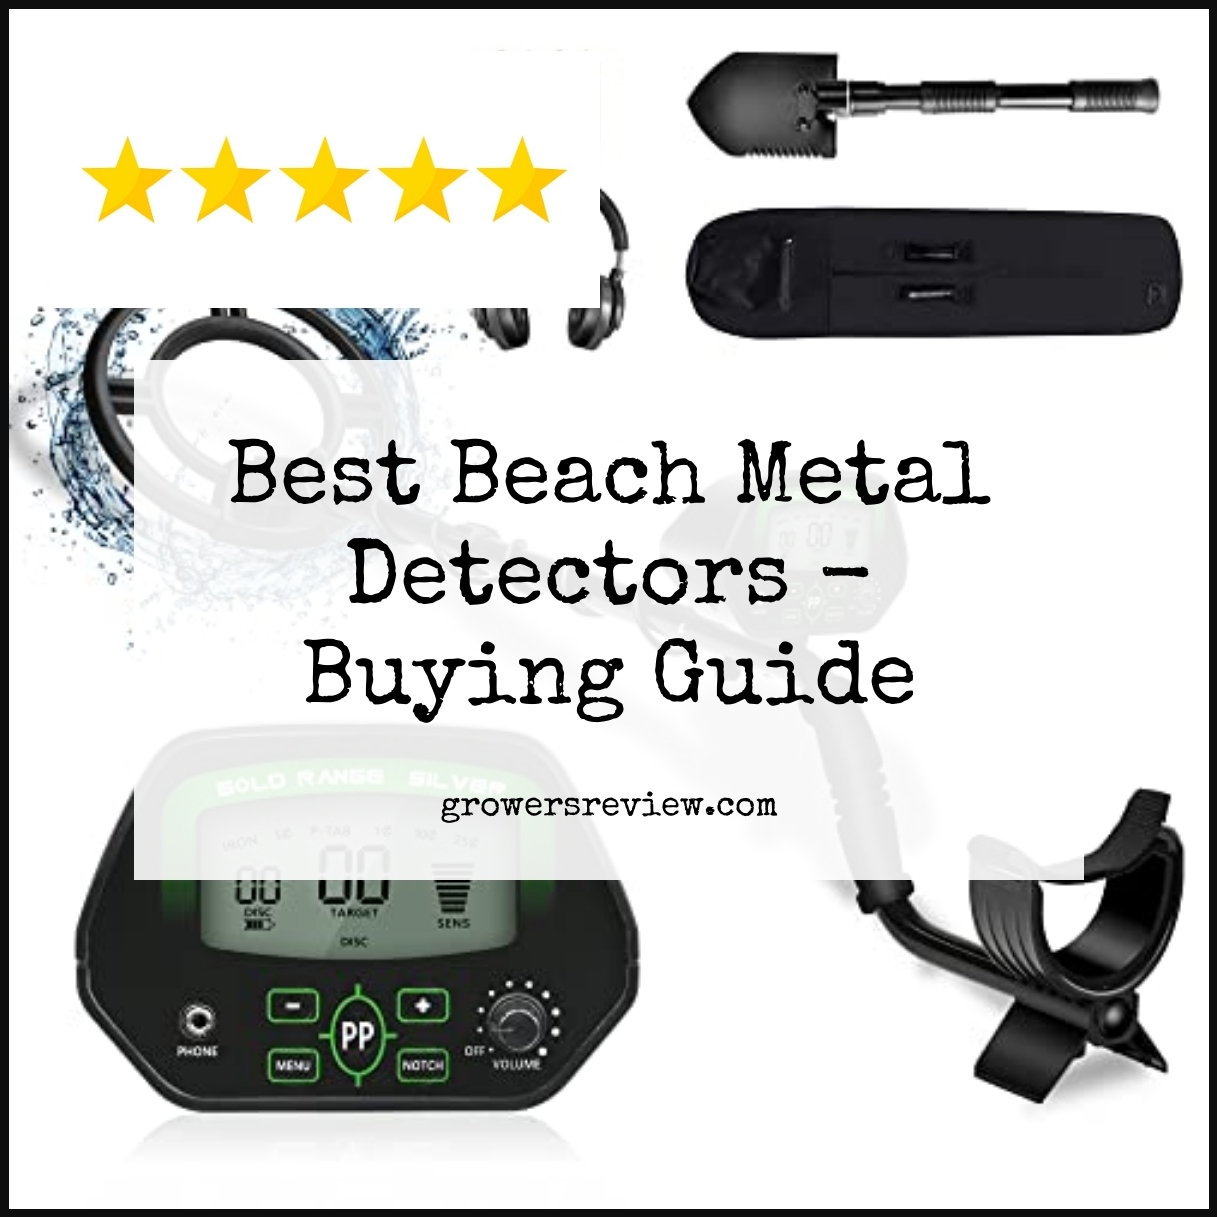 Best Beach Metal Detectors - Buying Guide